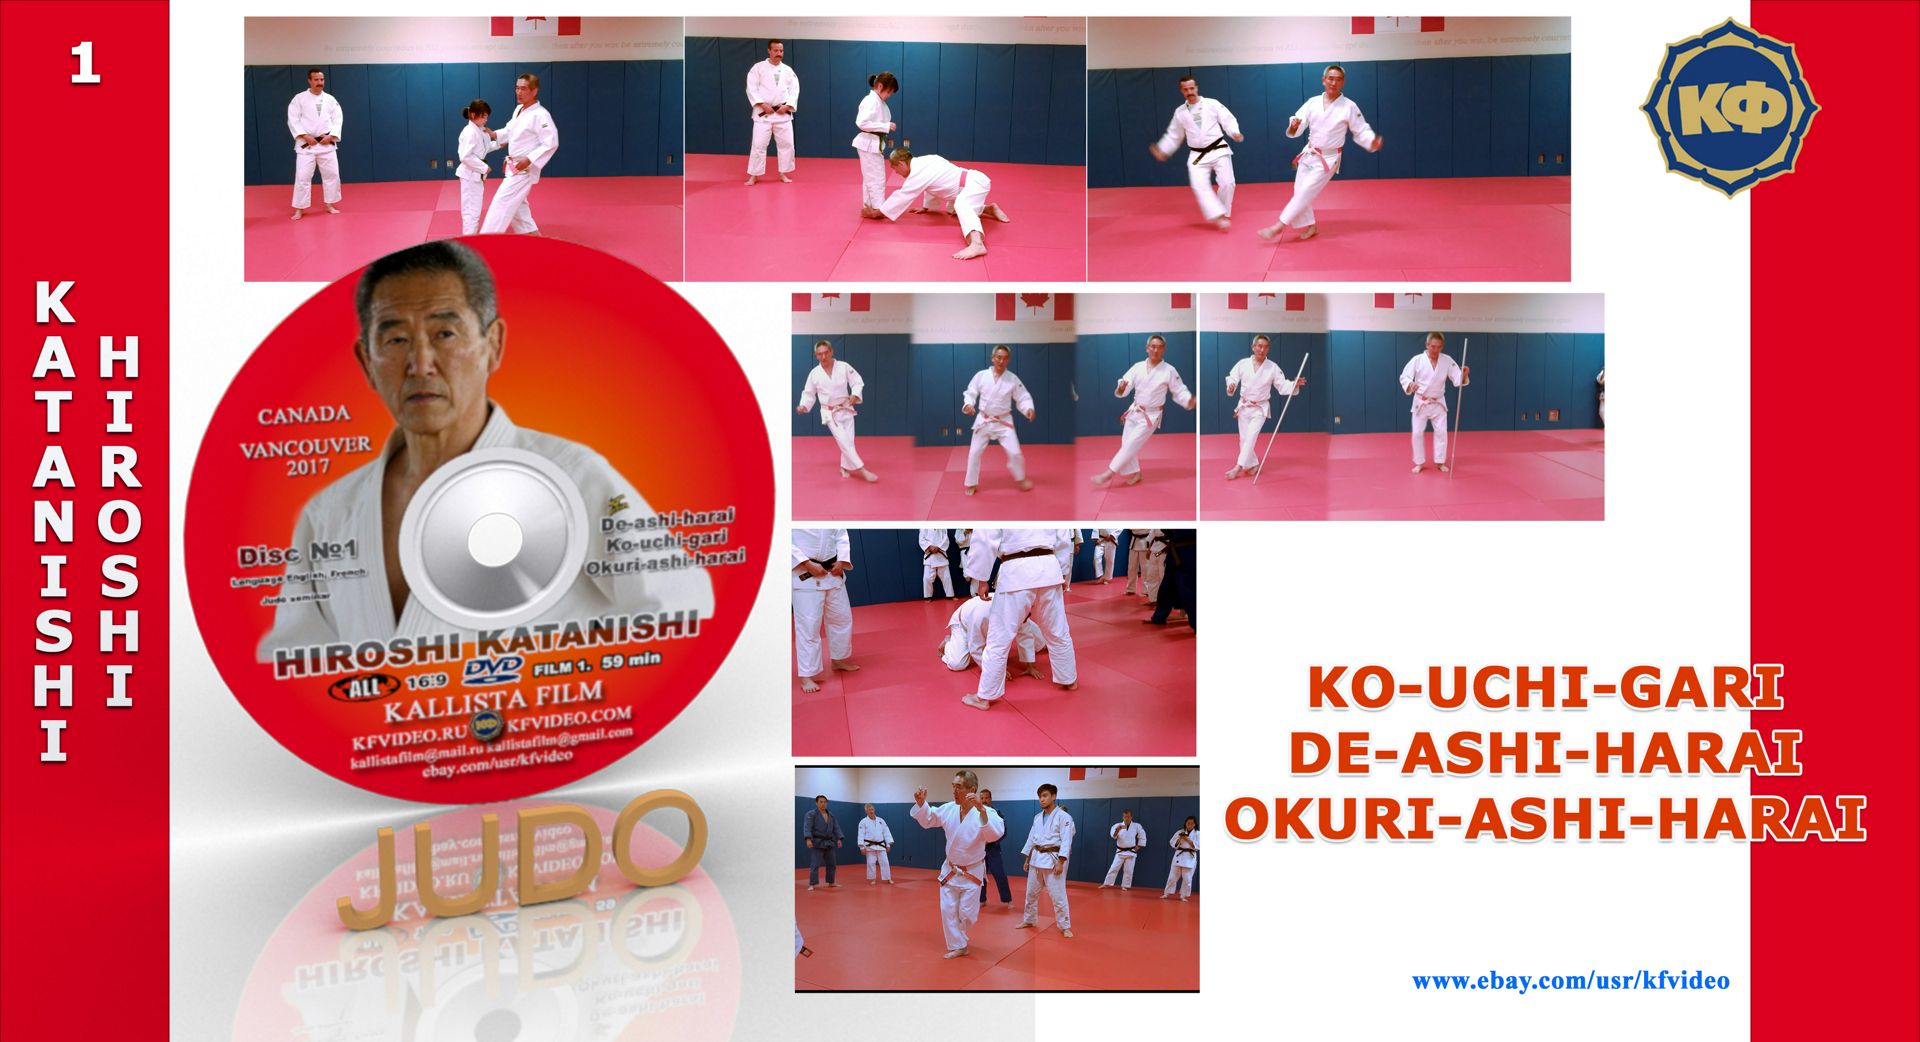 Семинар по технике дзюдо японского тренера Hiroshi Katanishi 8 дан. Филь 1.